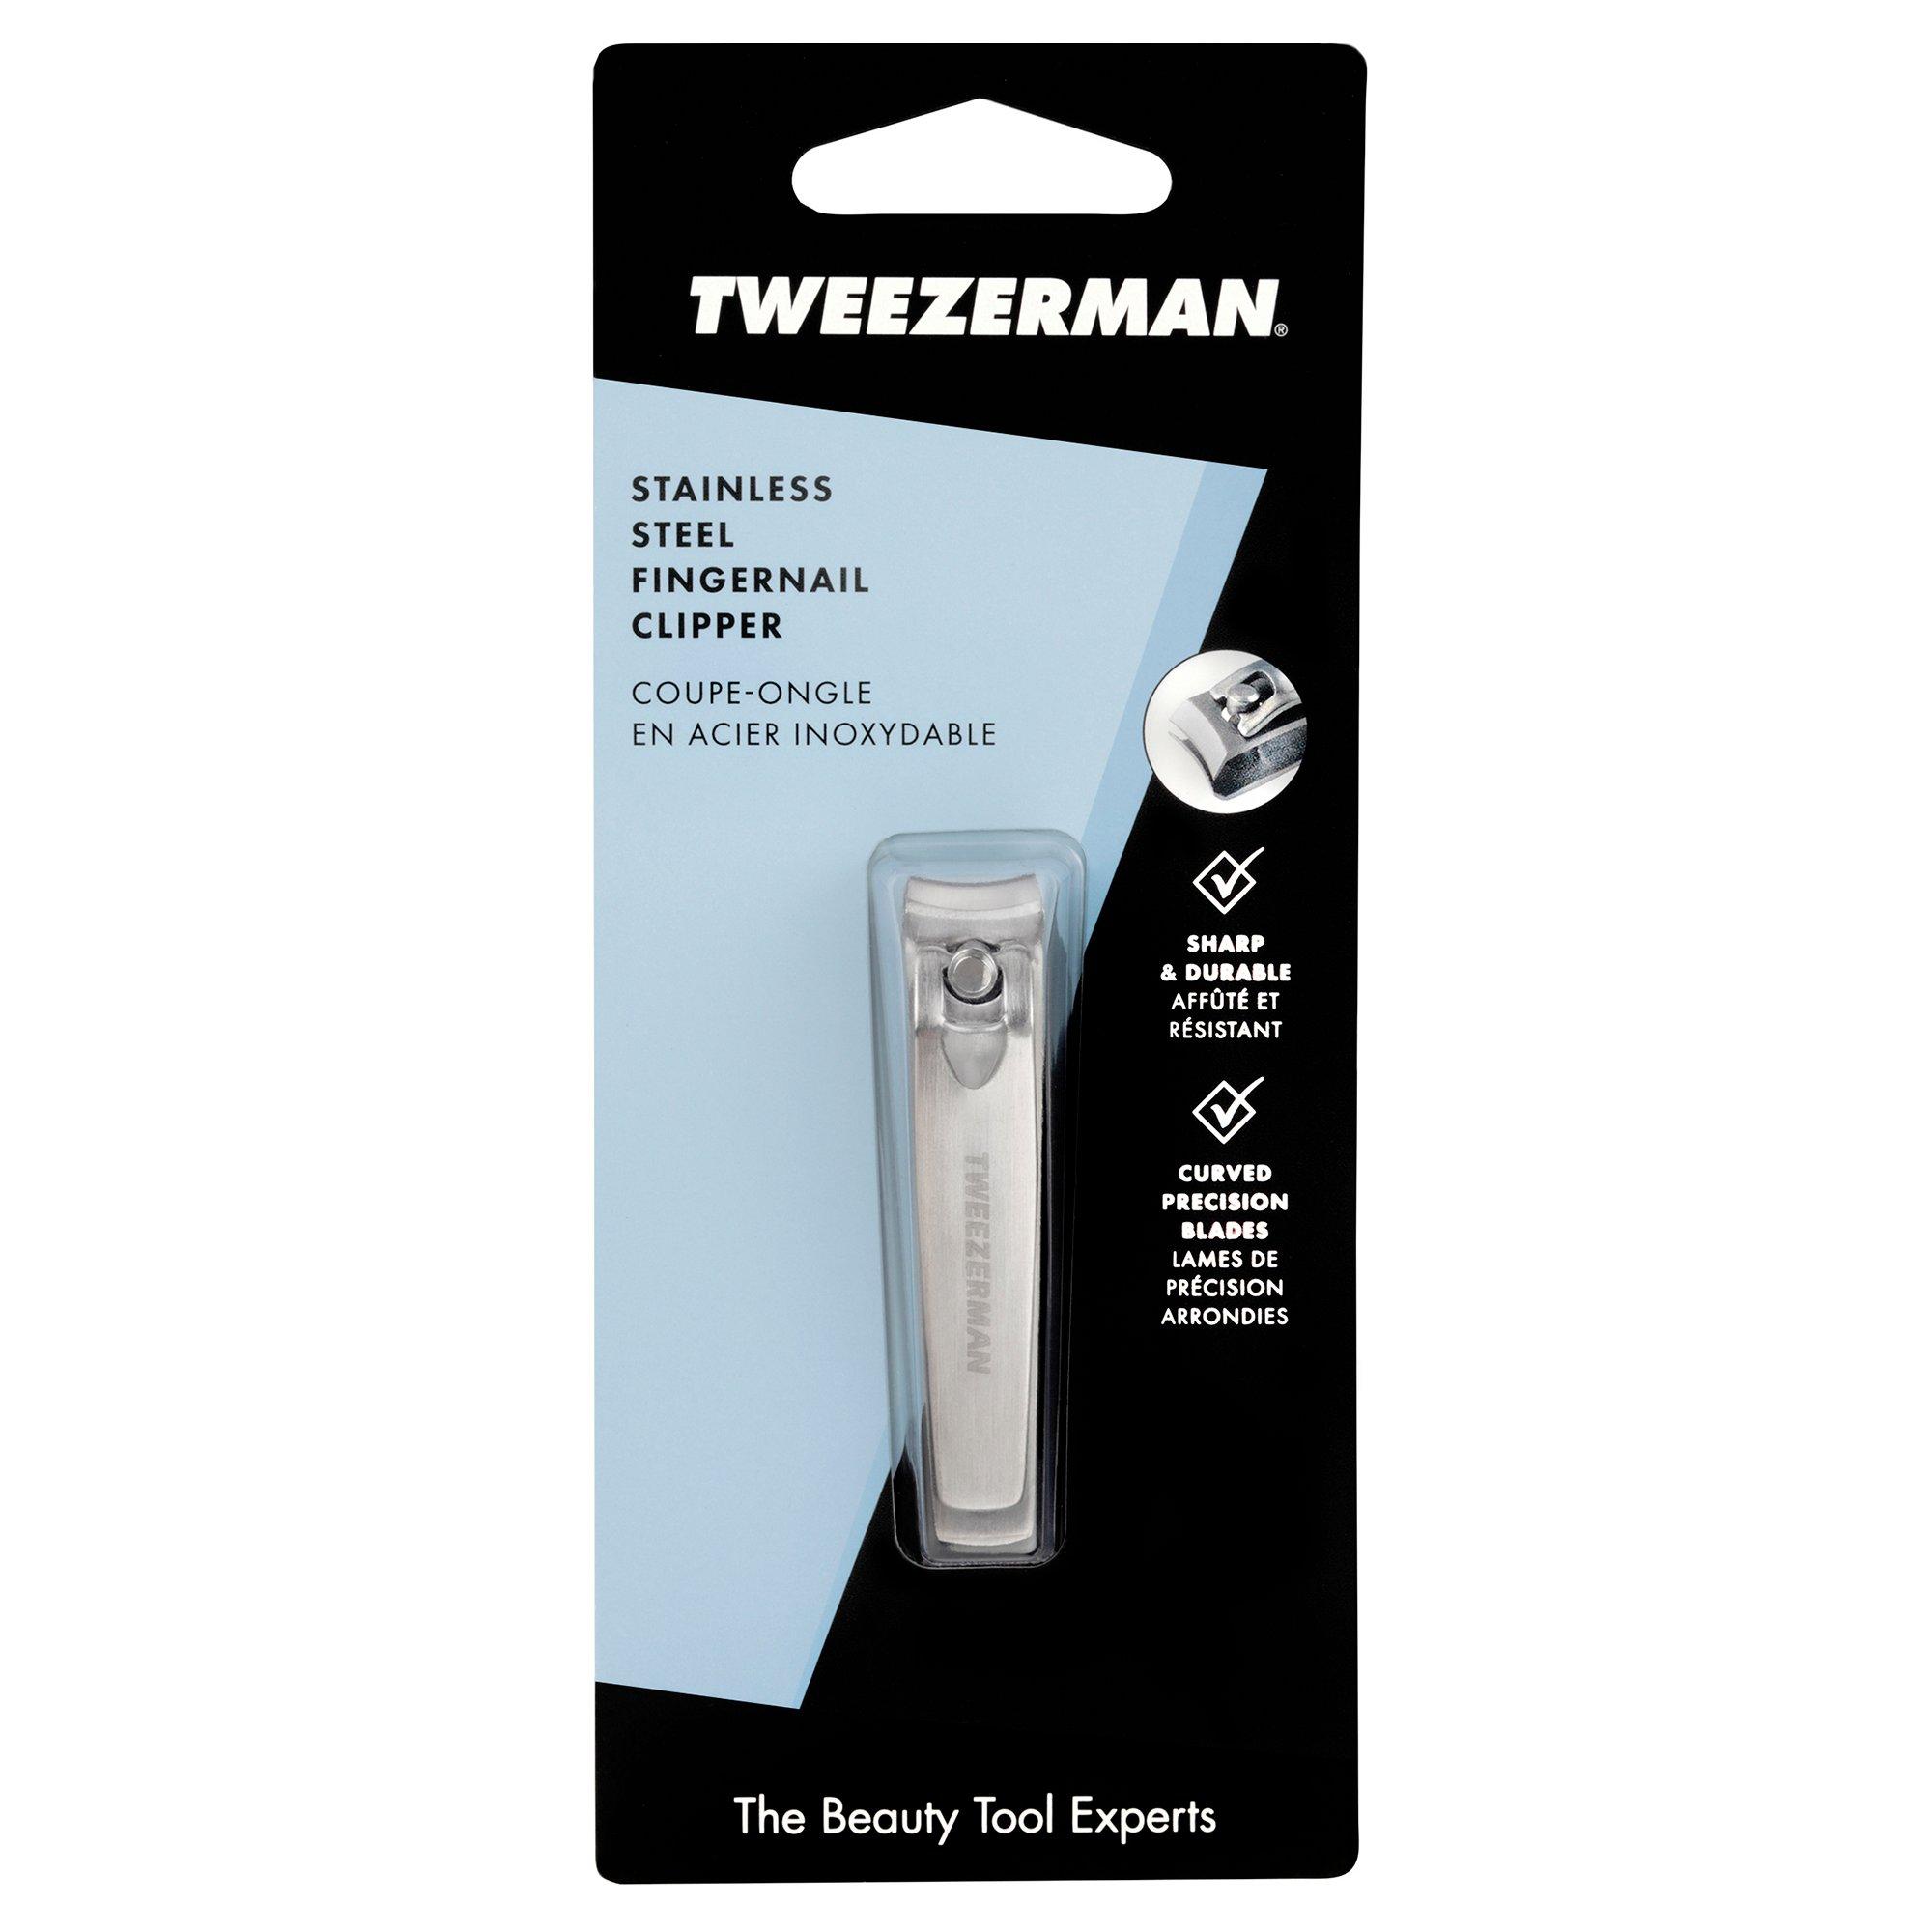 Tweezerman Extra Strength Toenail Clipper, Stainless Steel